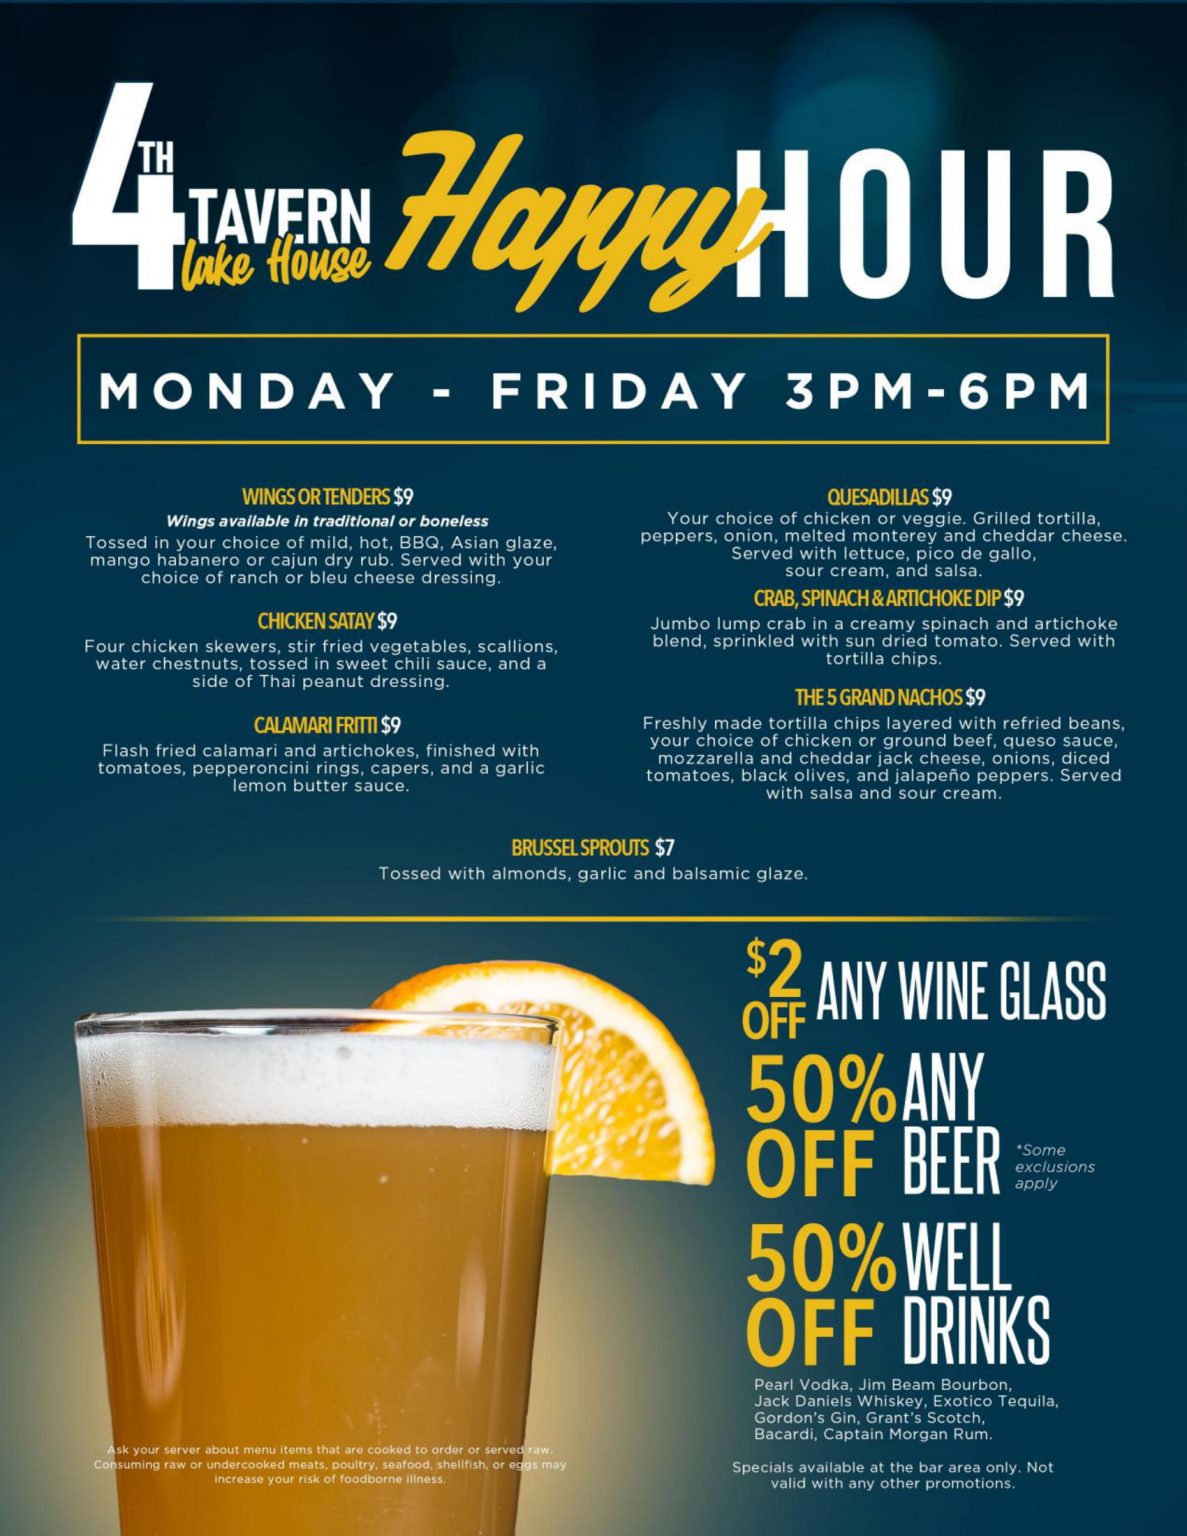 Happy Hour – 4th Tavern